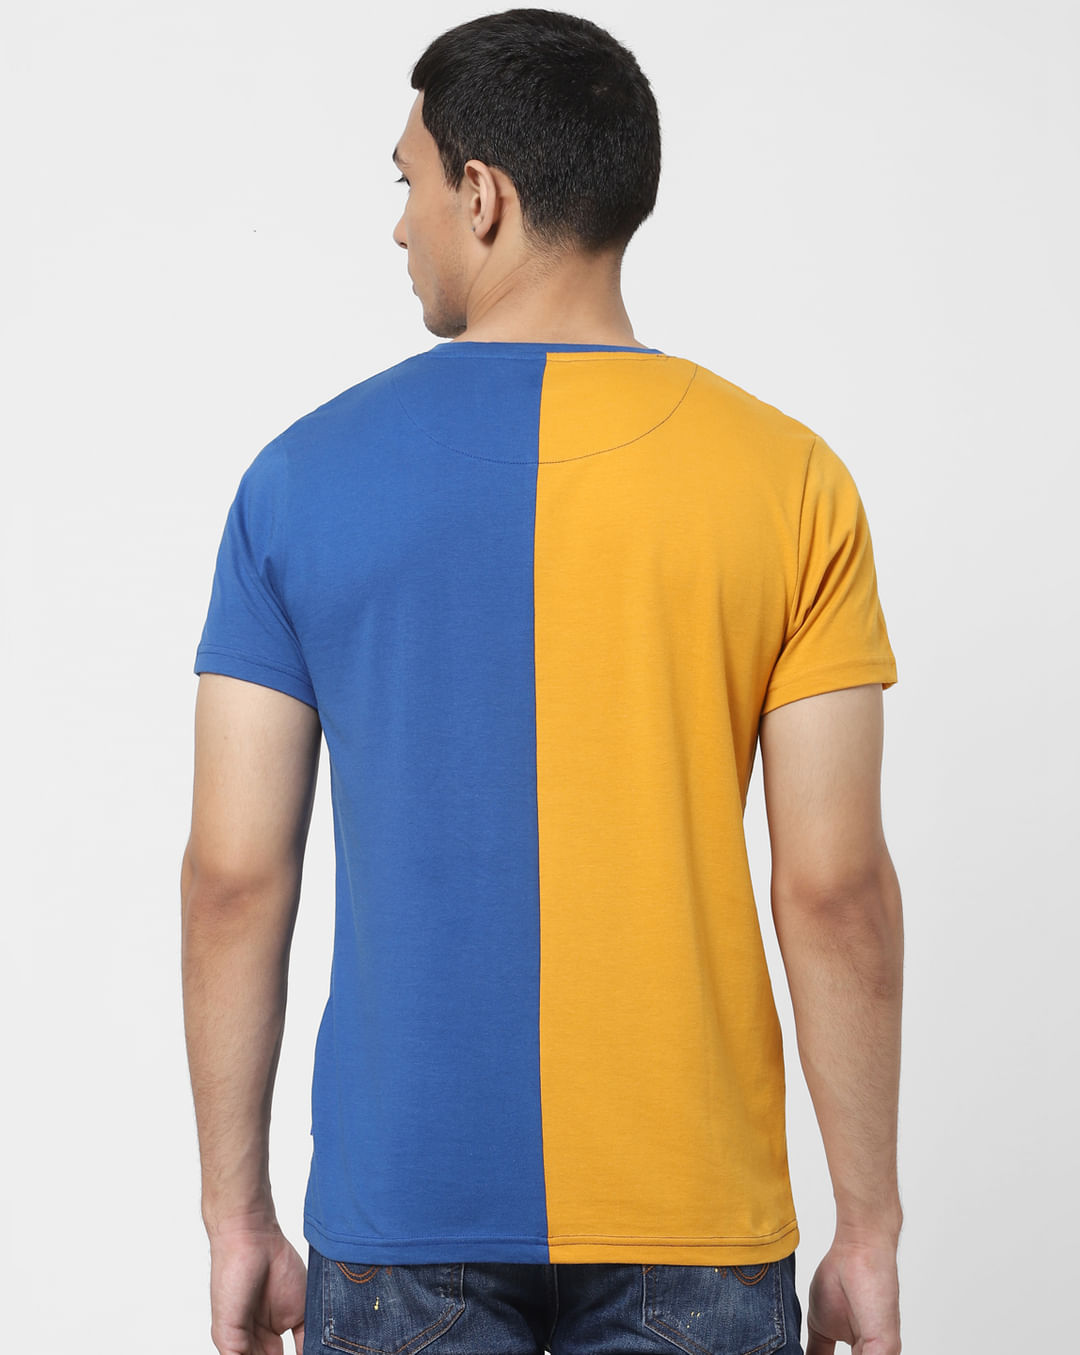 crew-neck-t-shirt-buy-men-yellow-graphic-print-t-shirt-online